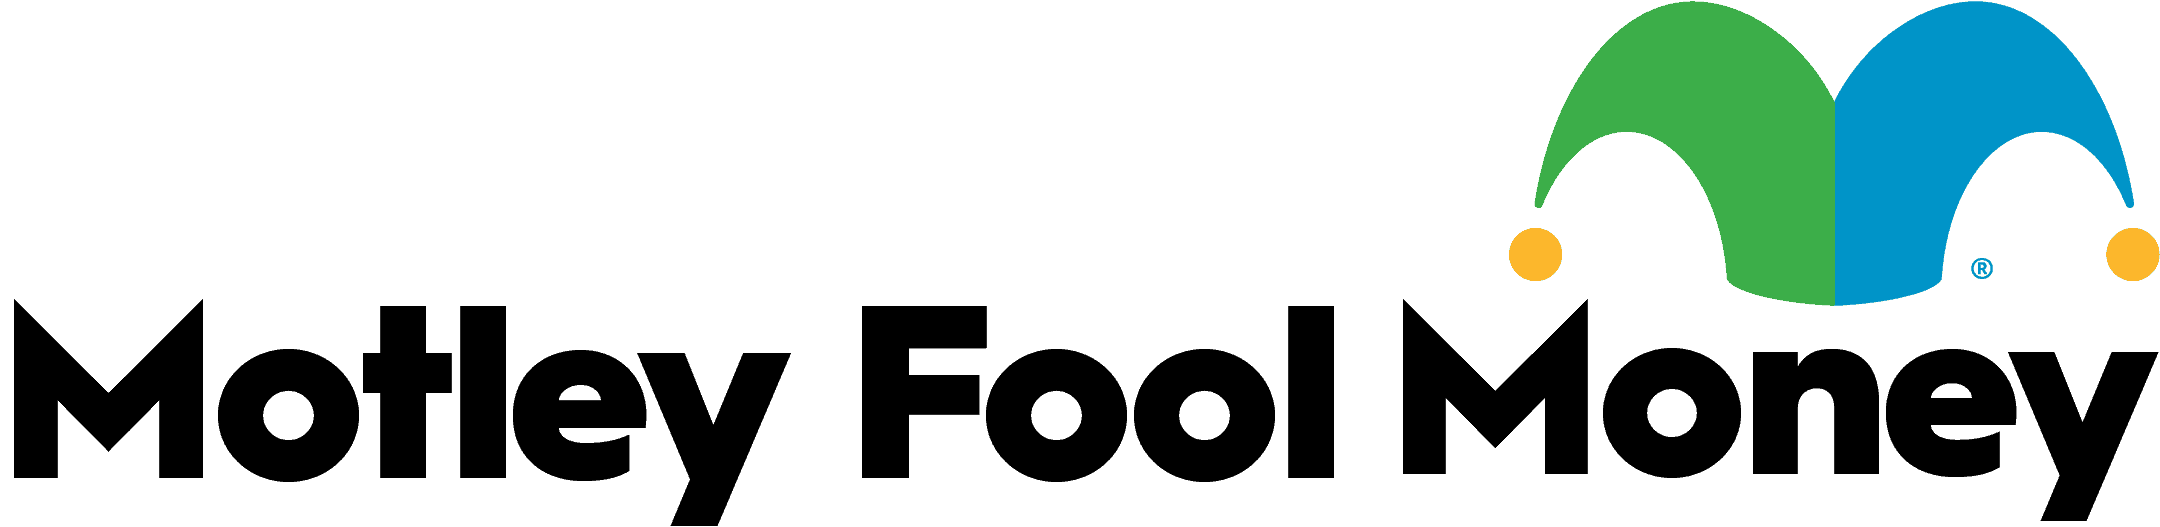 Motley Fool Money logo